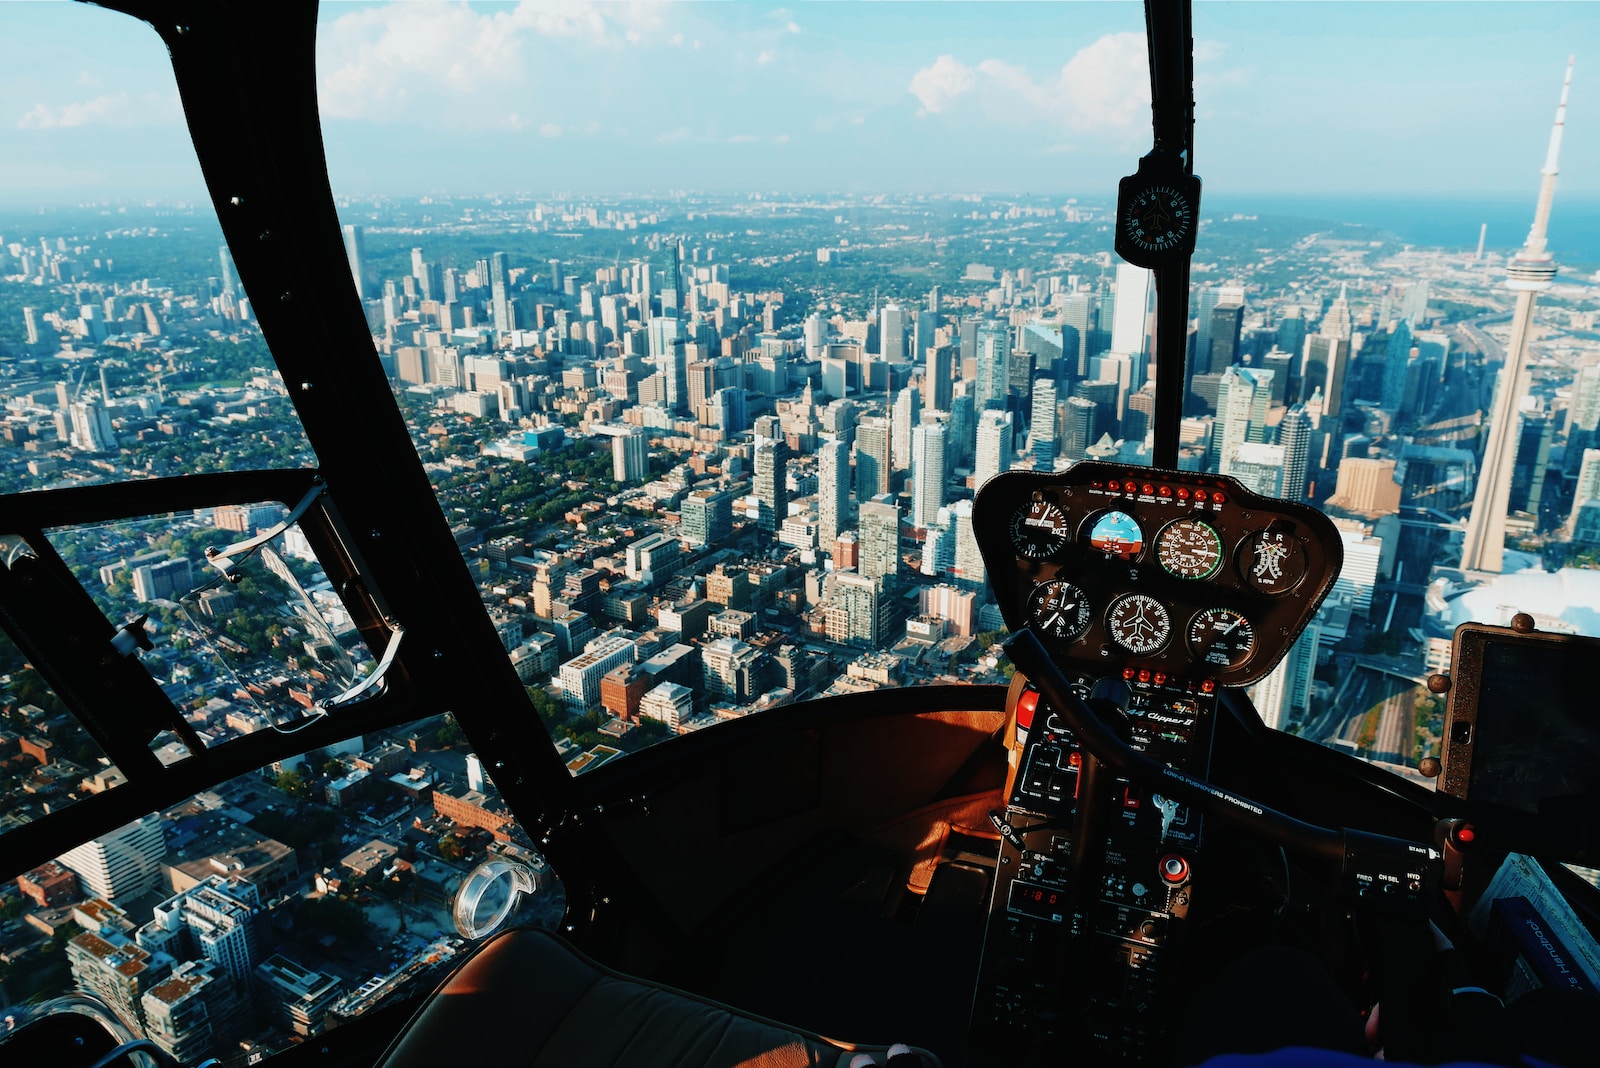 pilot taking photo of city